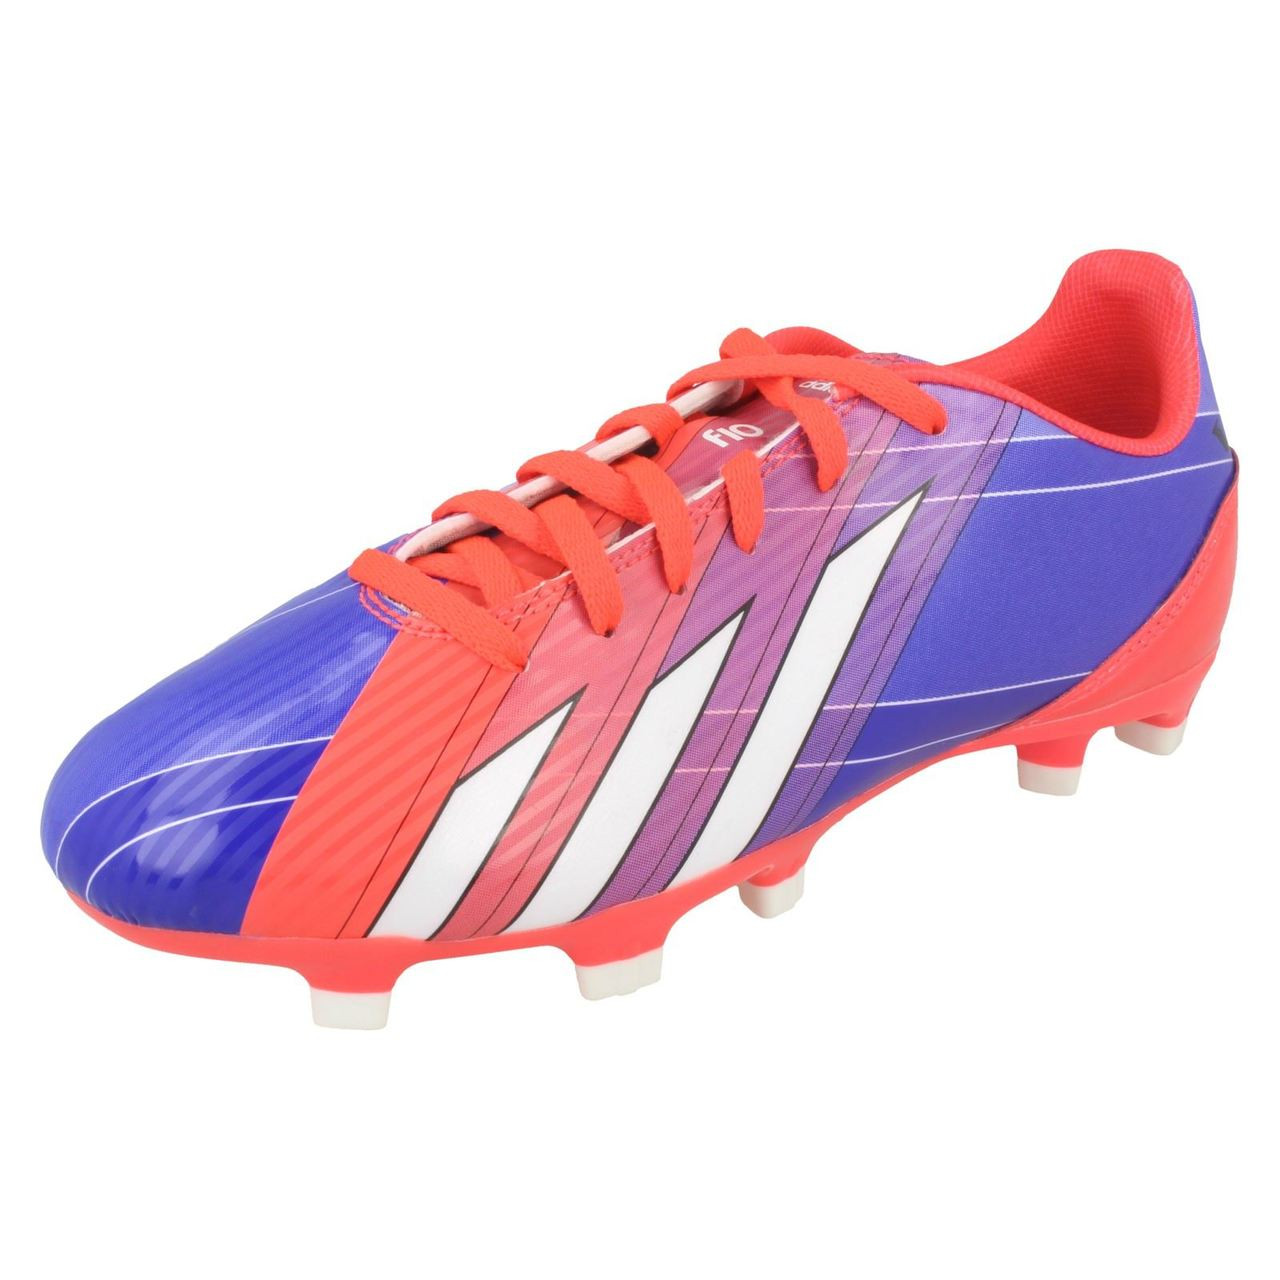 Boys Adidas Lionel Messi Football Boots F10 TRX FG J